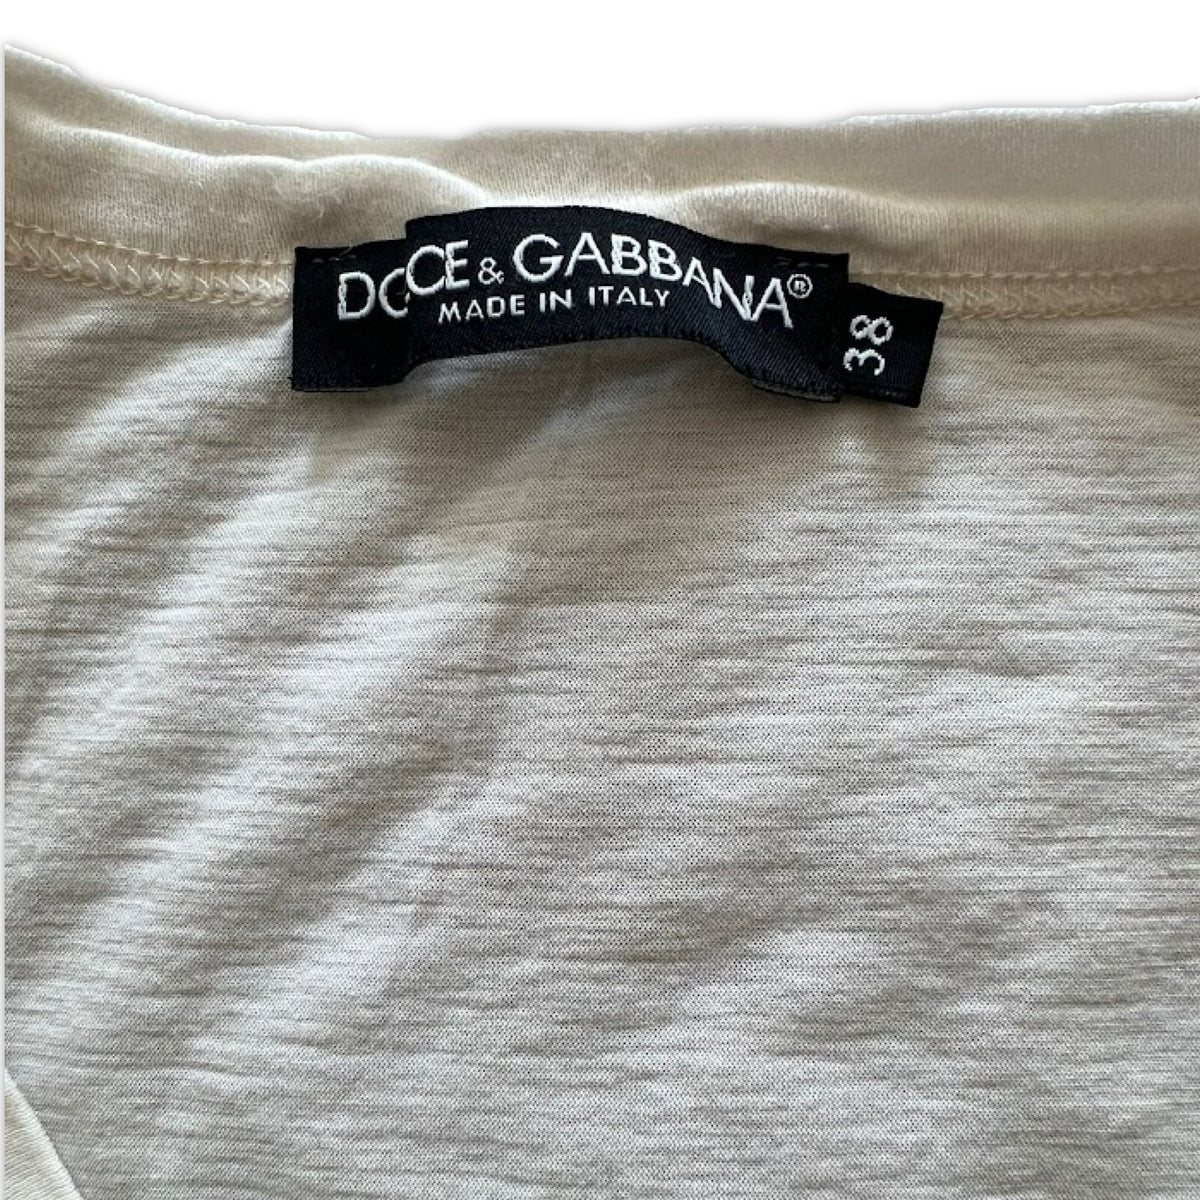 DOLCE & GABBANA Marilyn Monroe Cream Graphic T-Shirt | Size 38 IT